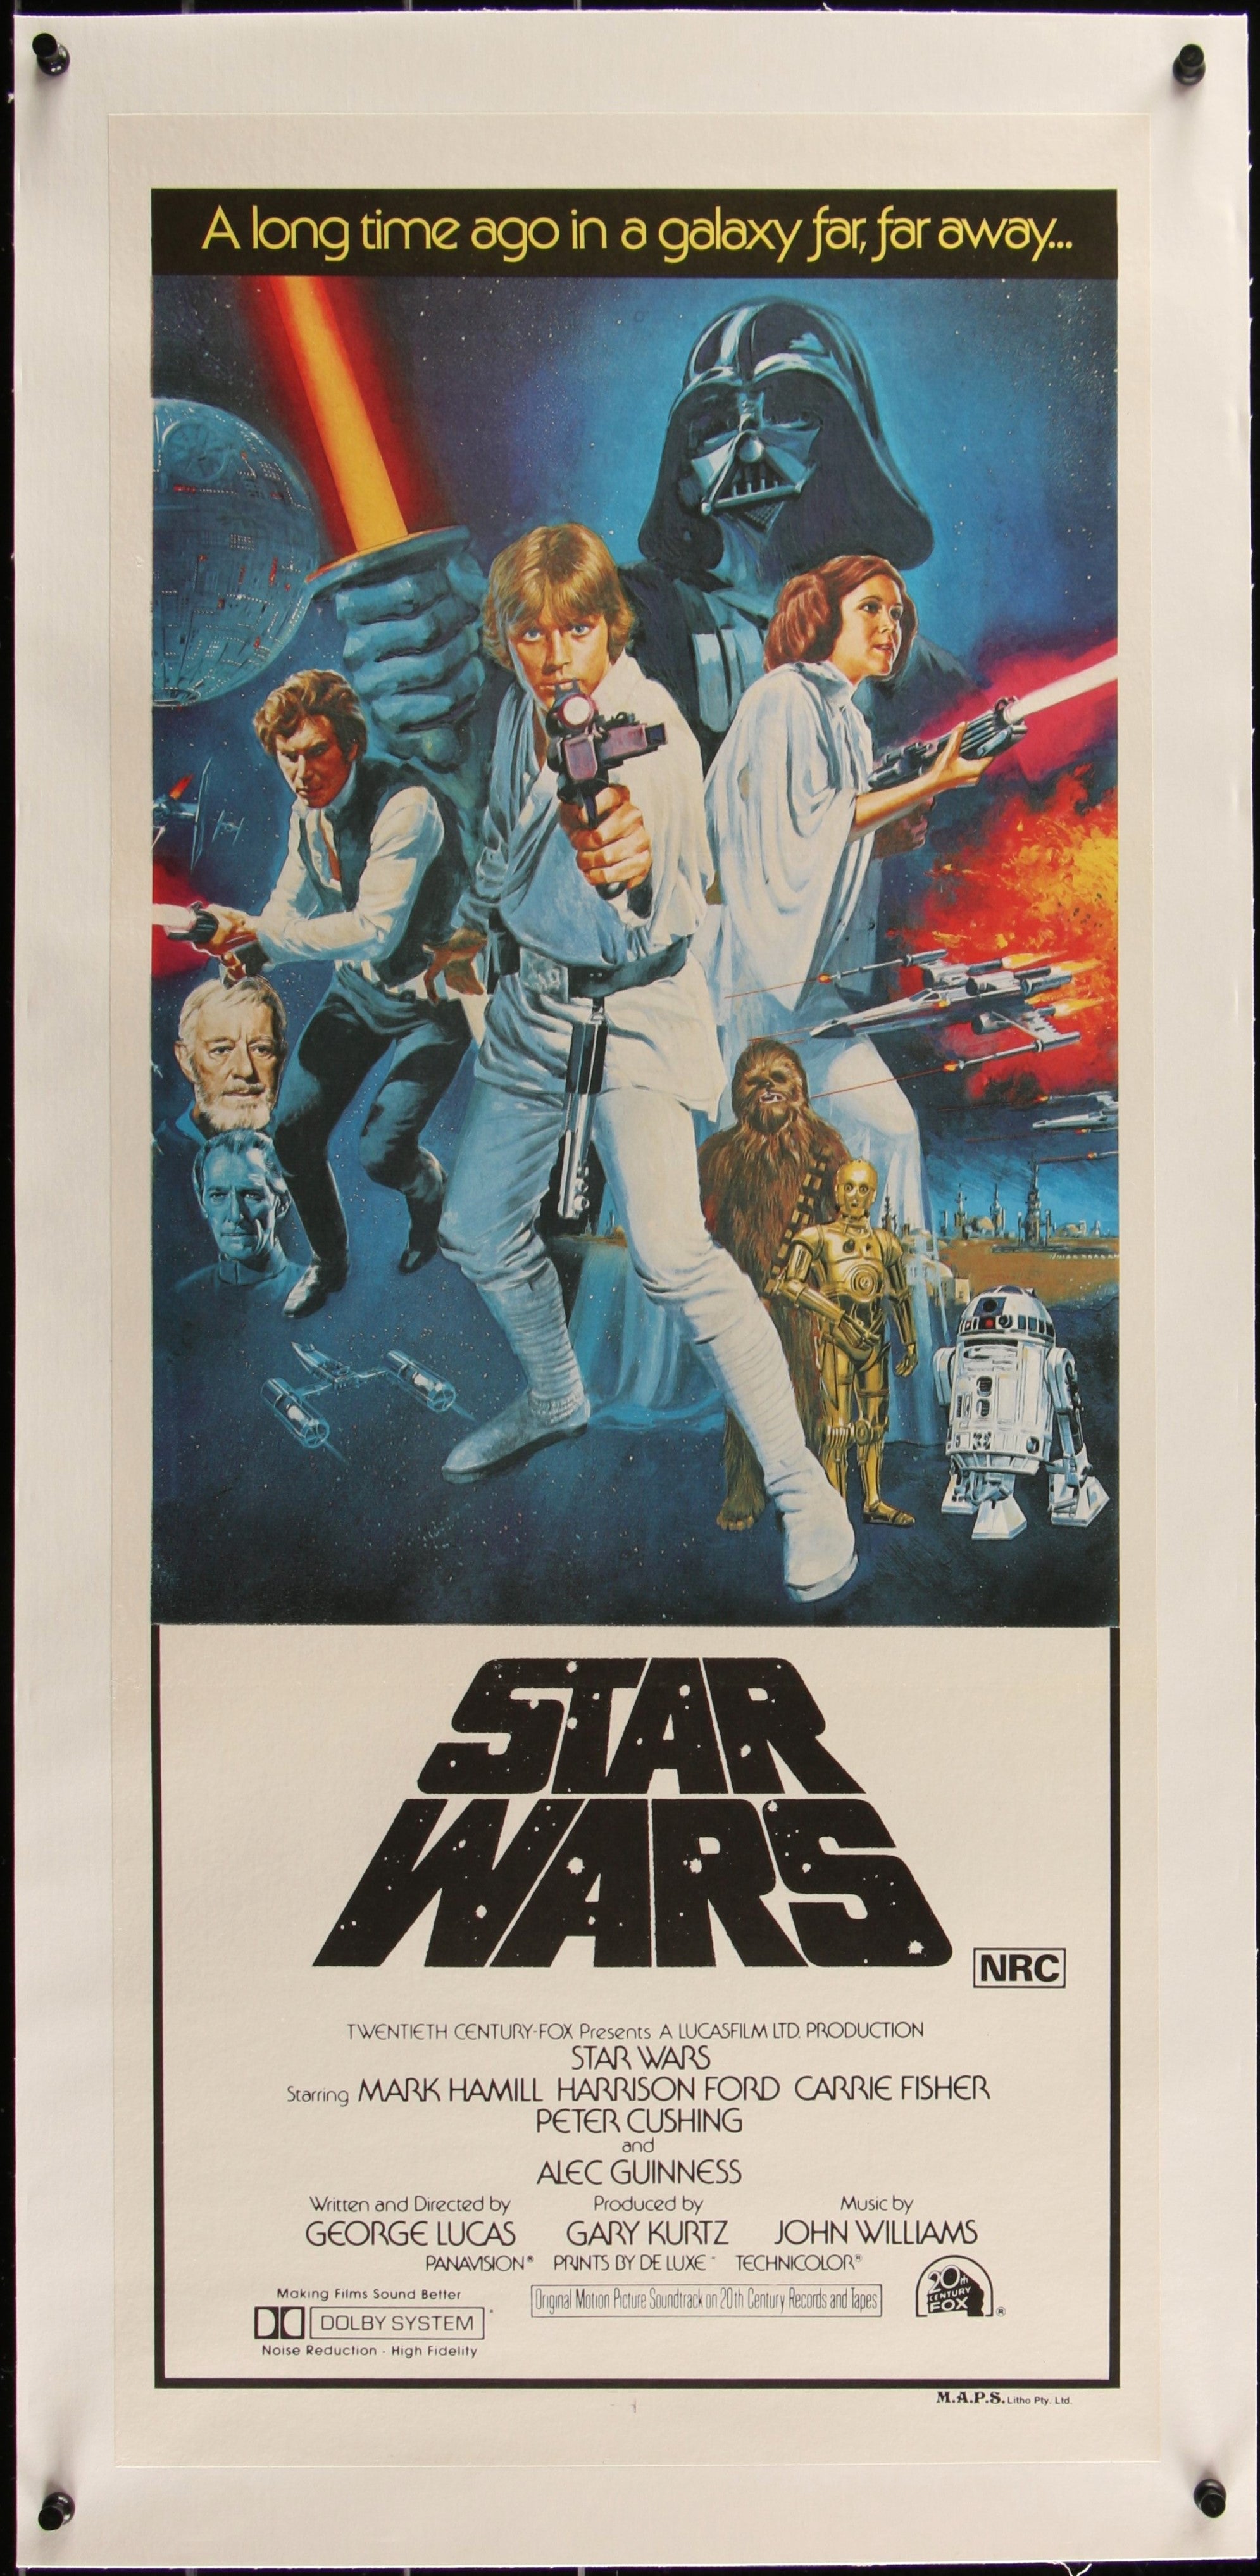 STAR WARS: EPISODE IV – A NEW HOPE (1977)